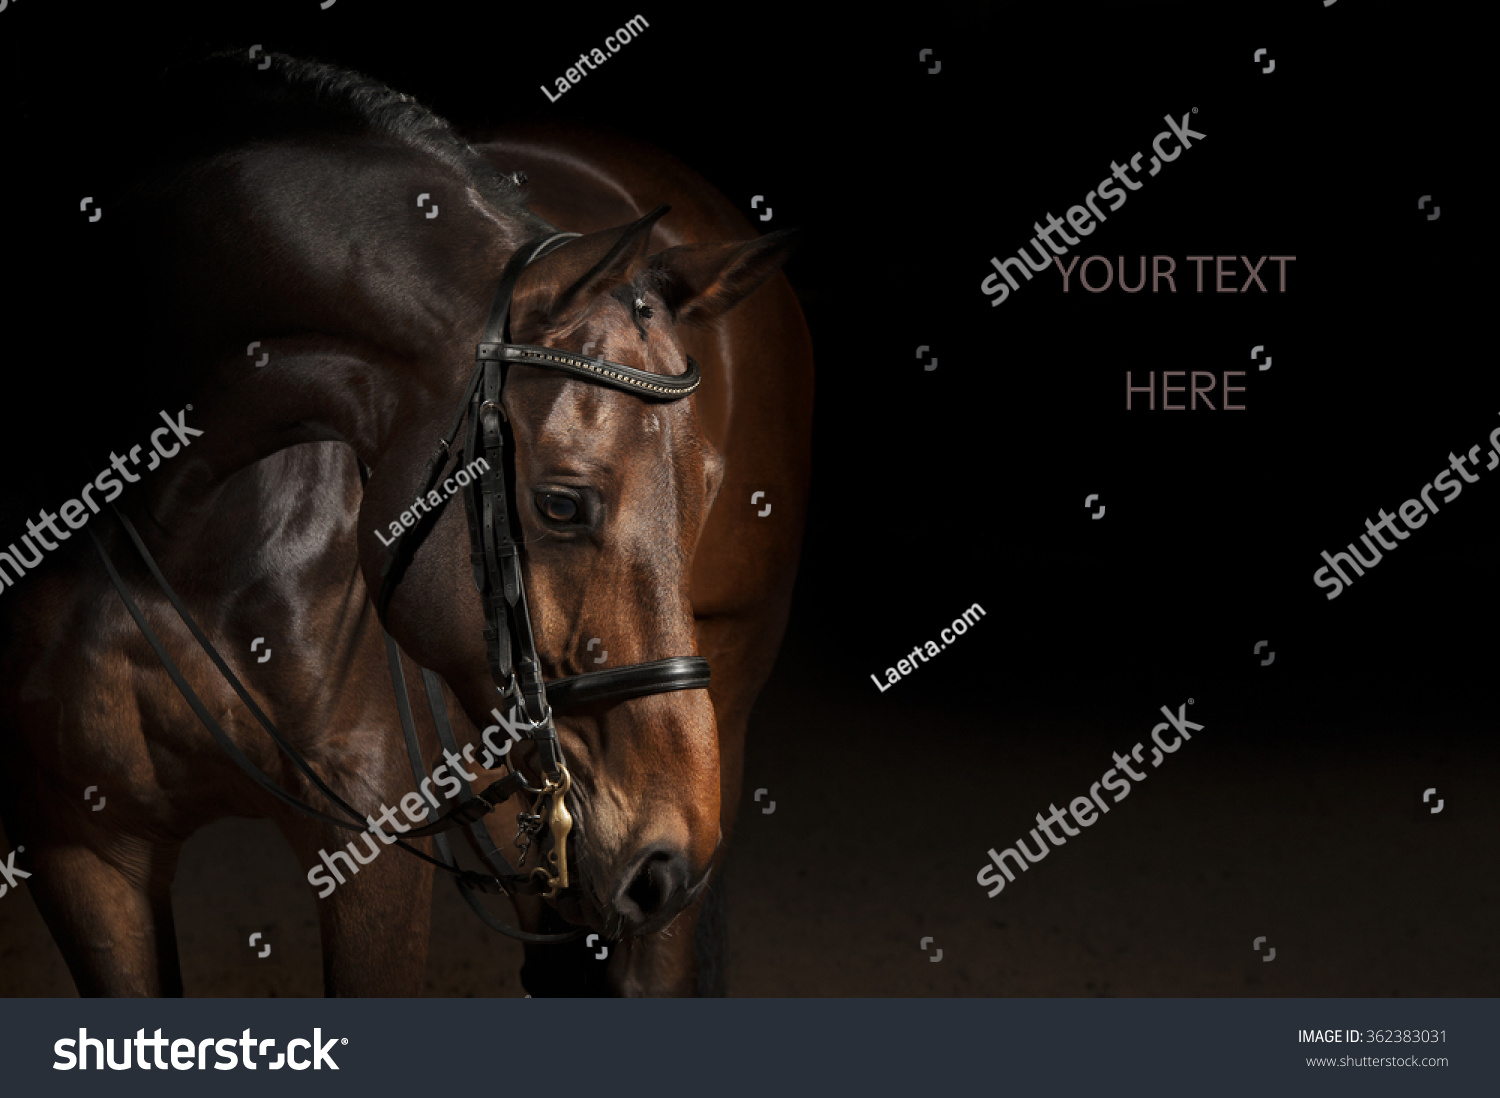 Portrait of a bay sport dressage horse #362383031